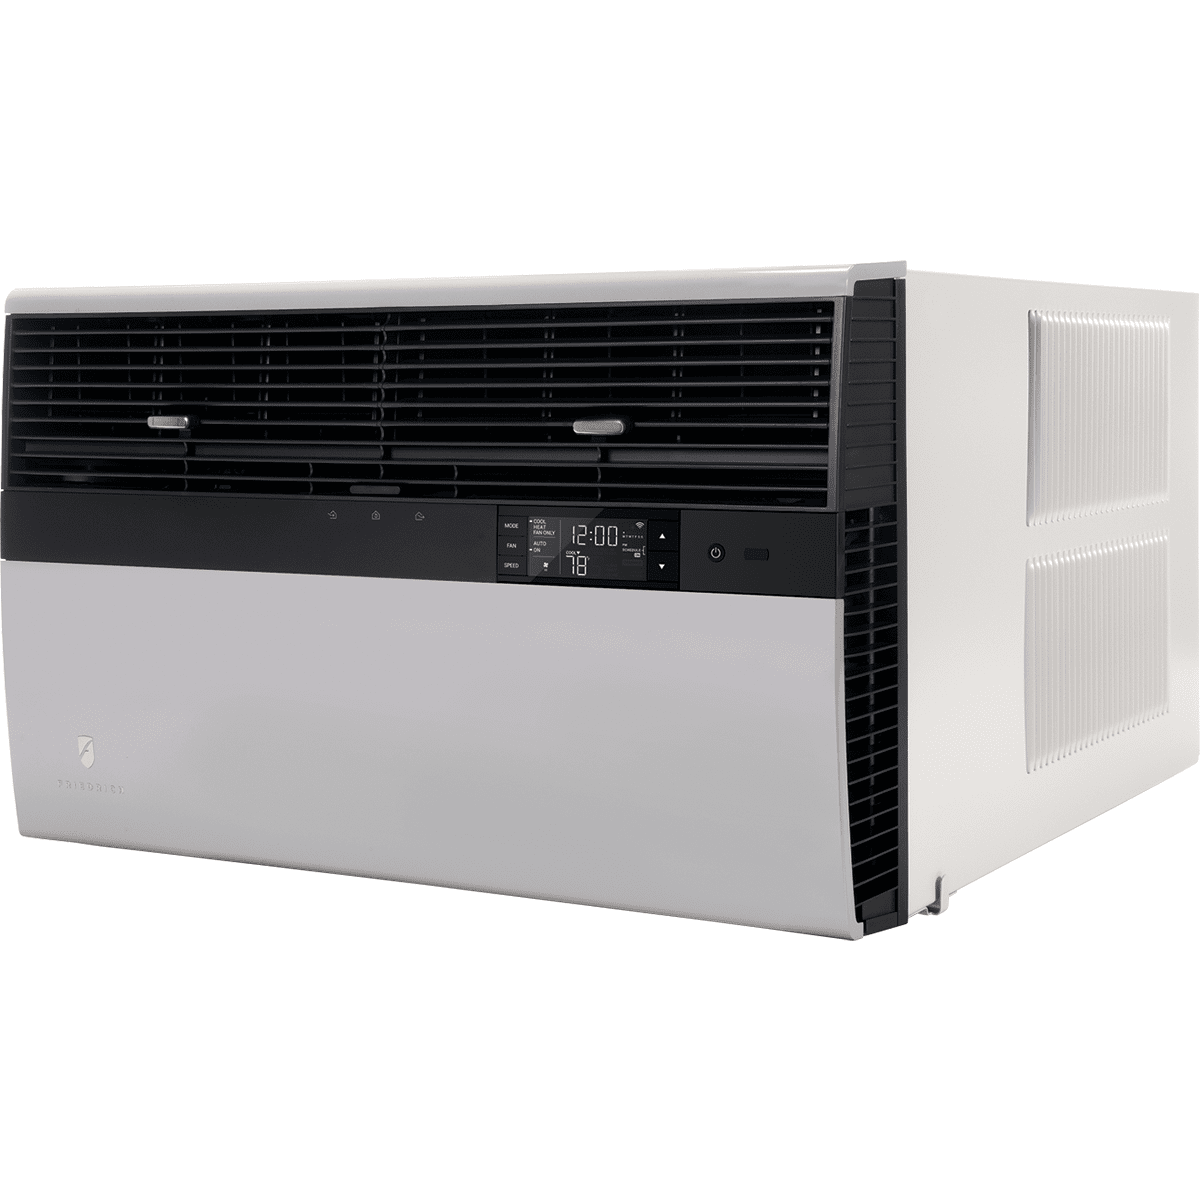 Friedrich Kuhl 12,000 Btu Window Air Conditioner With Electric Heat